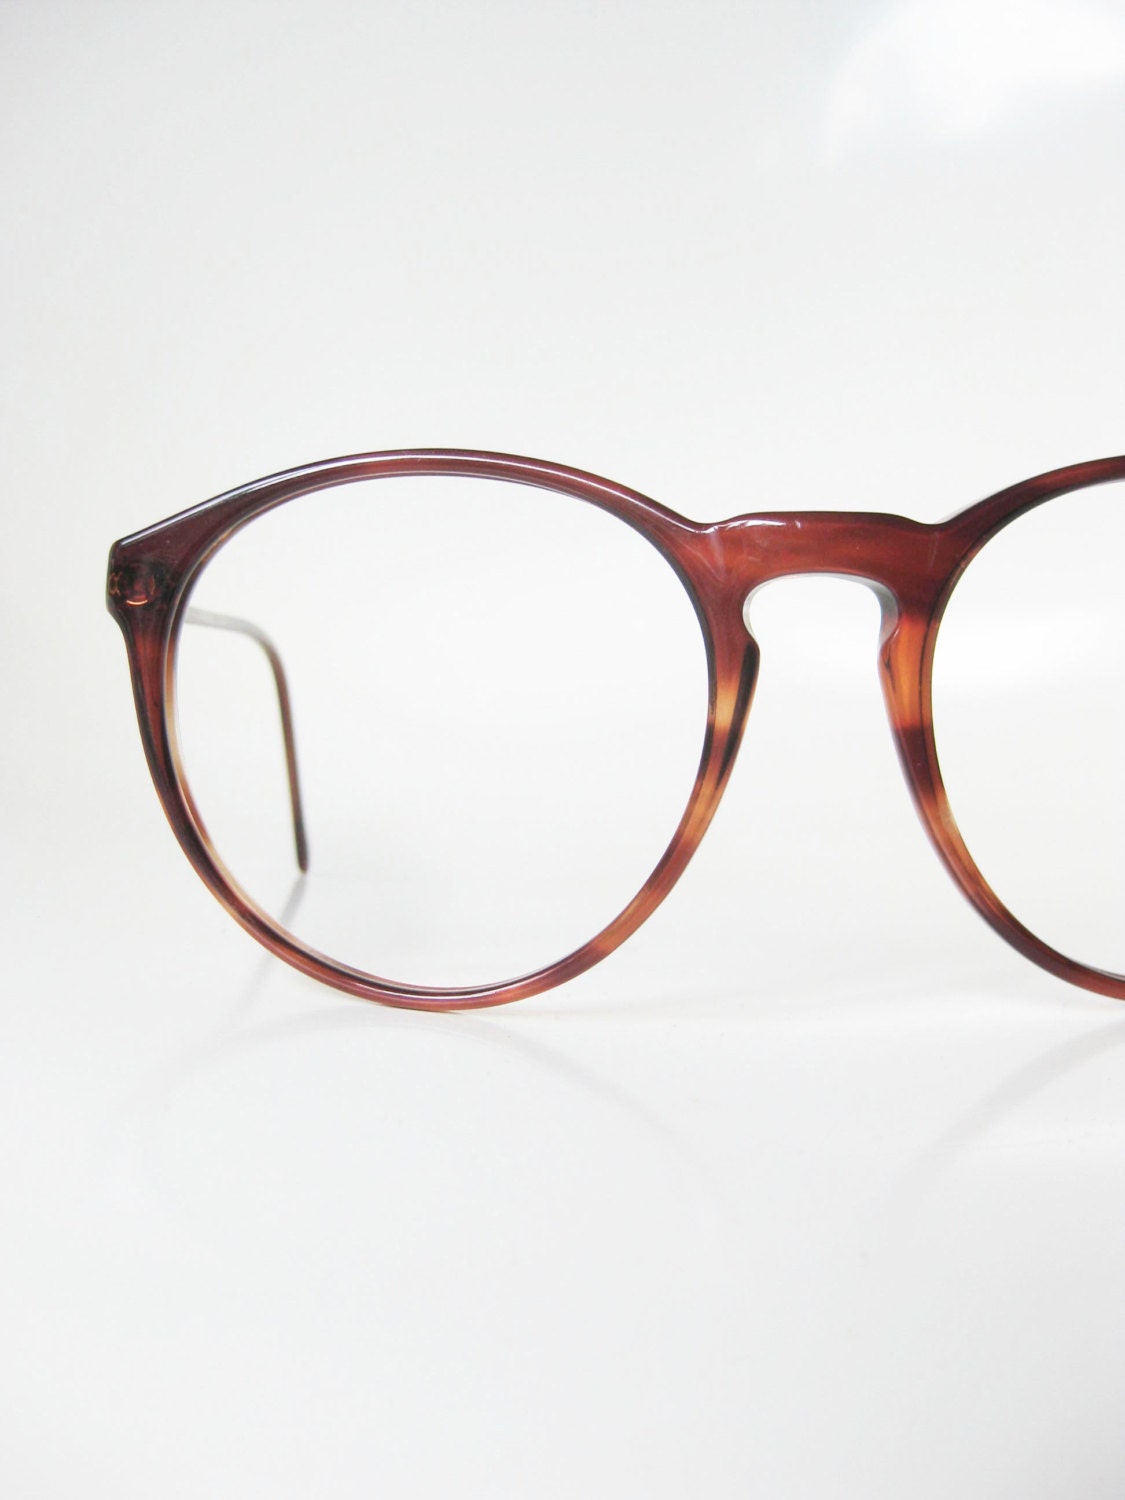 Vintage Round Eyeglasses Italian Womens Eyeglass Frames Ladies Glasses 1960s 60s Mid Century